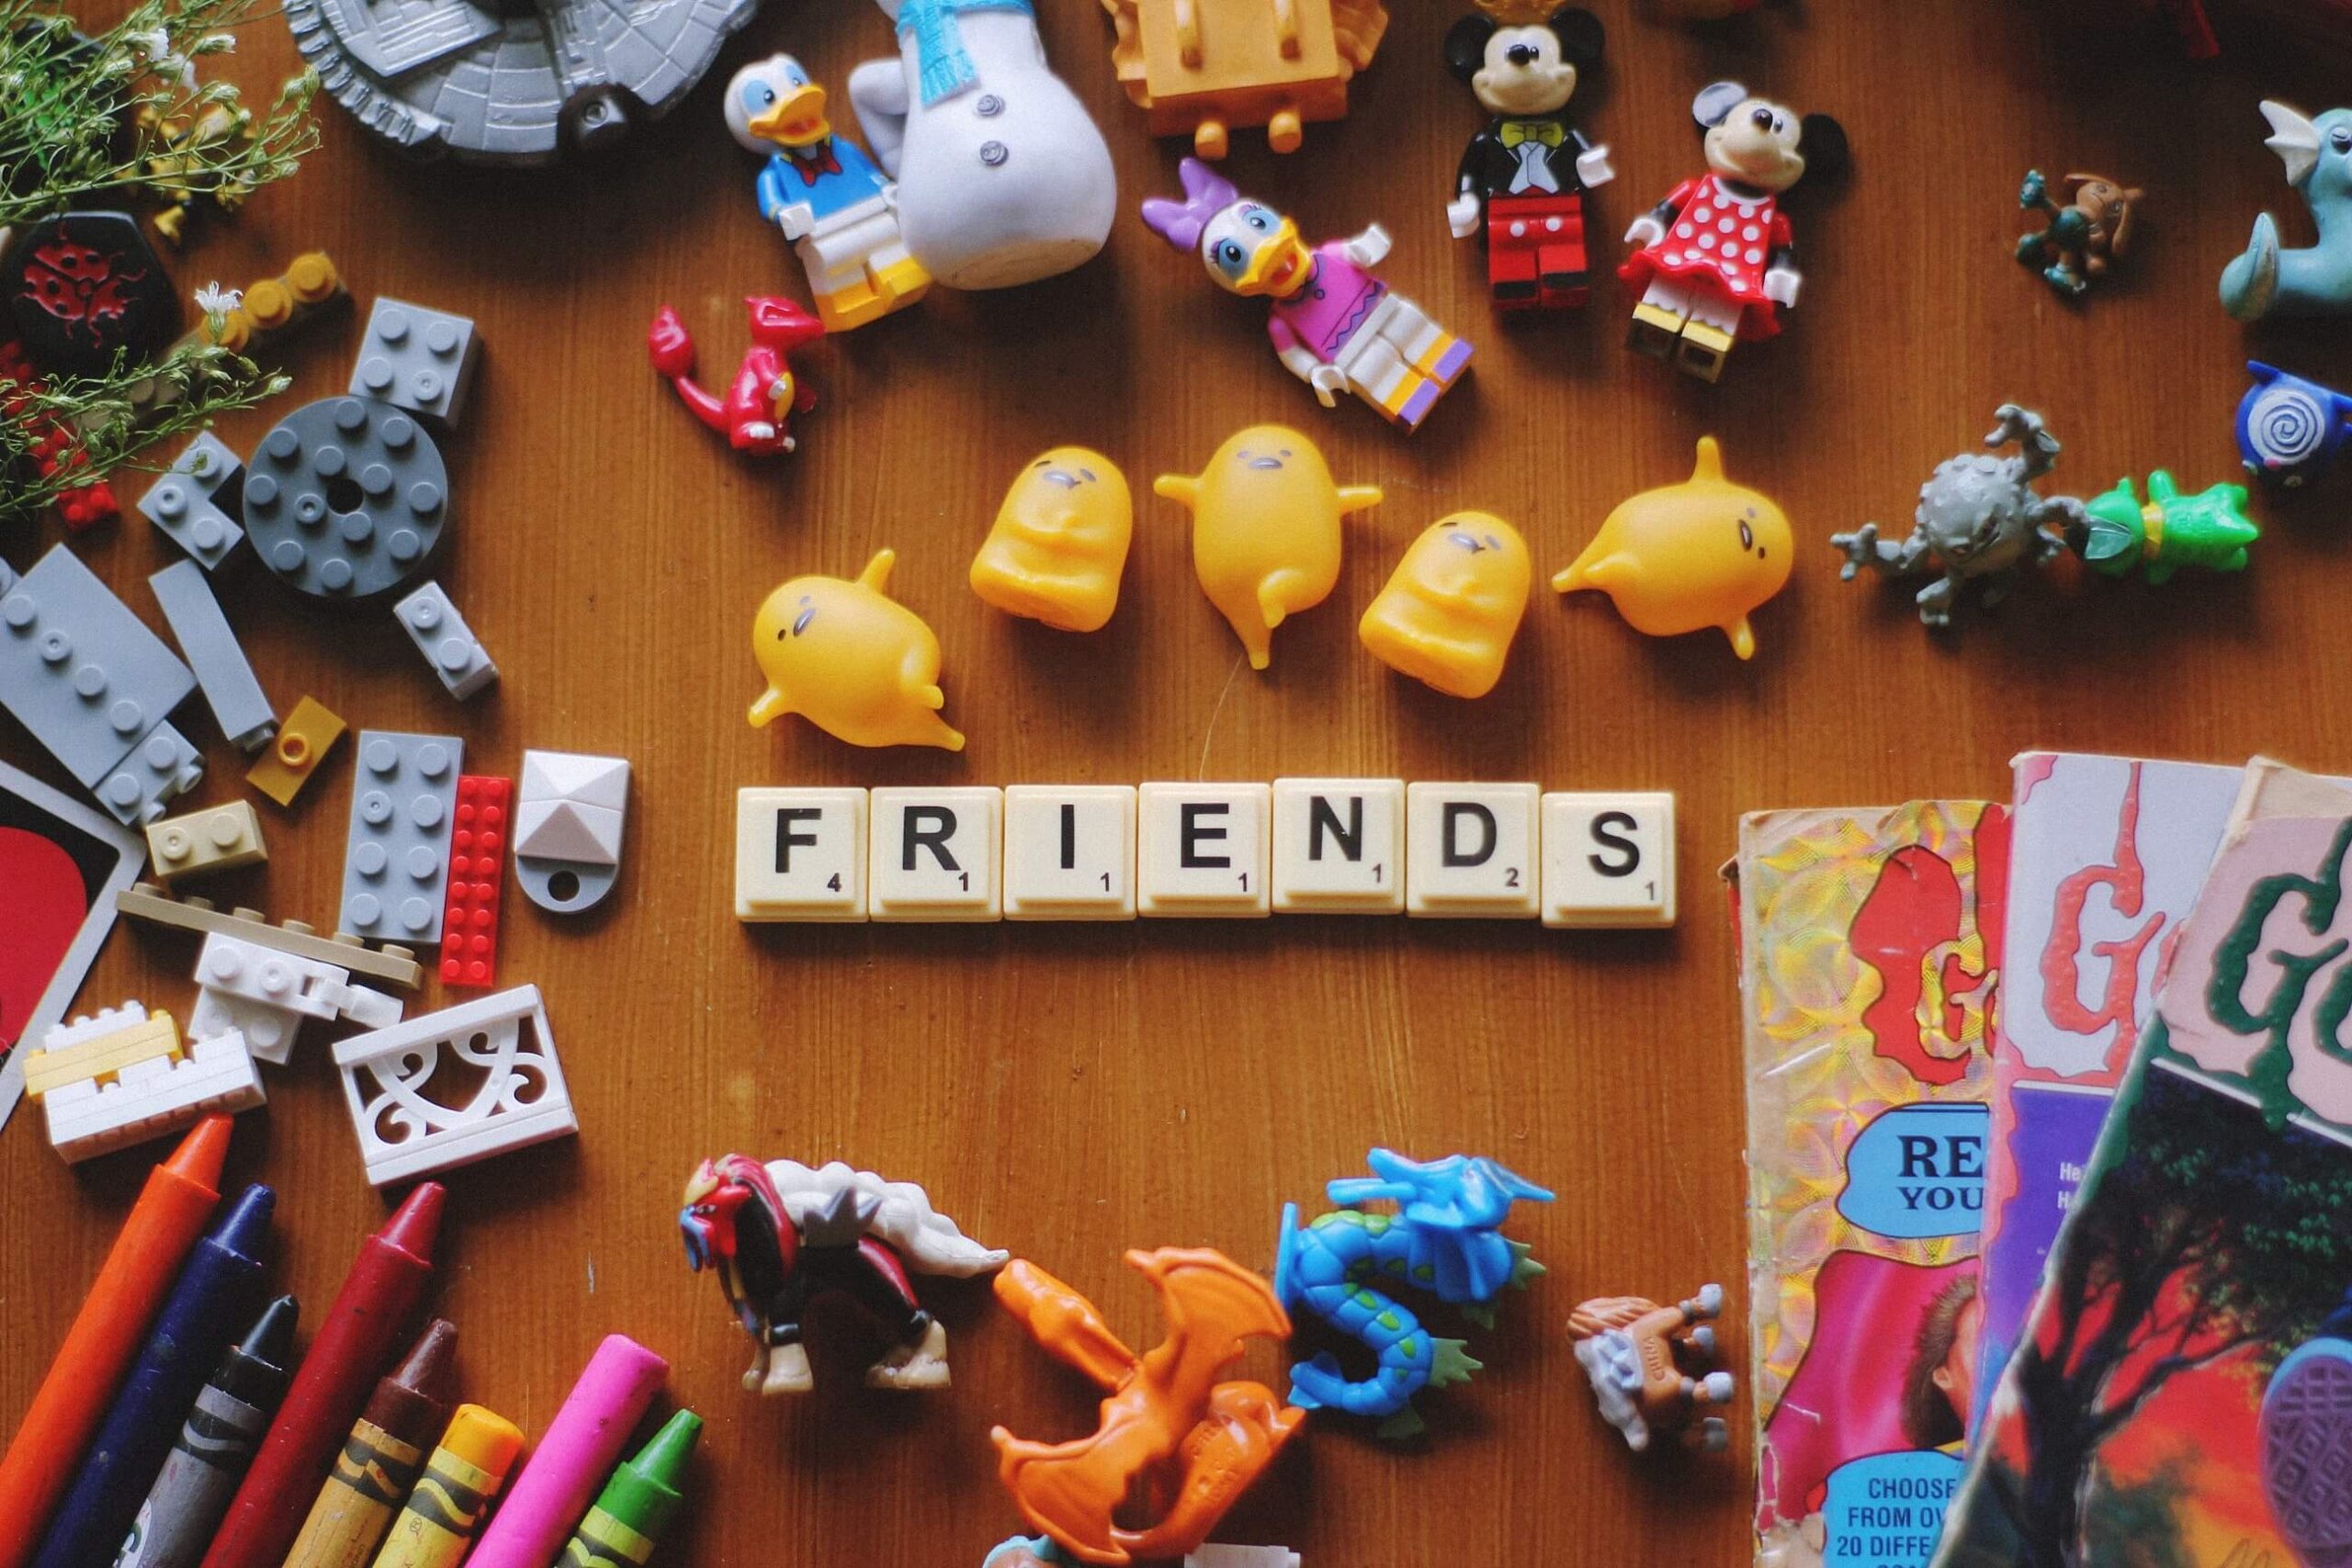 「FRIENDS」というブロックが中央に置かれた画像